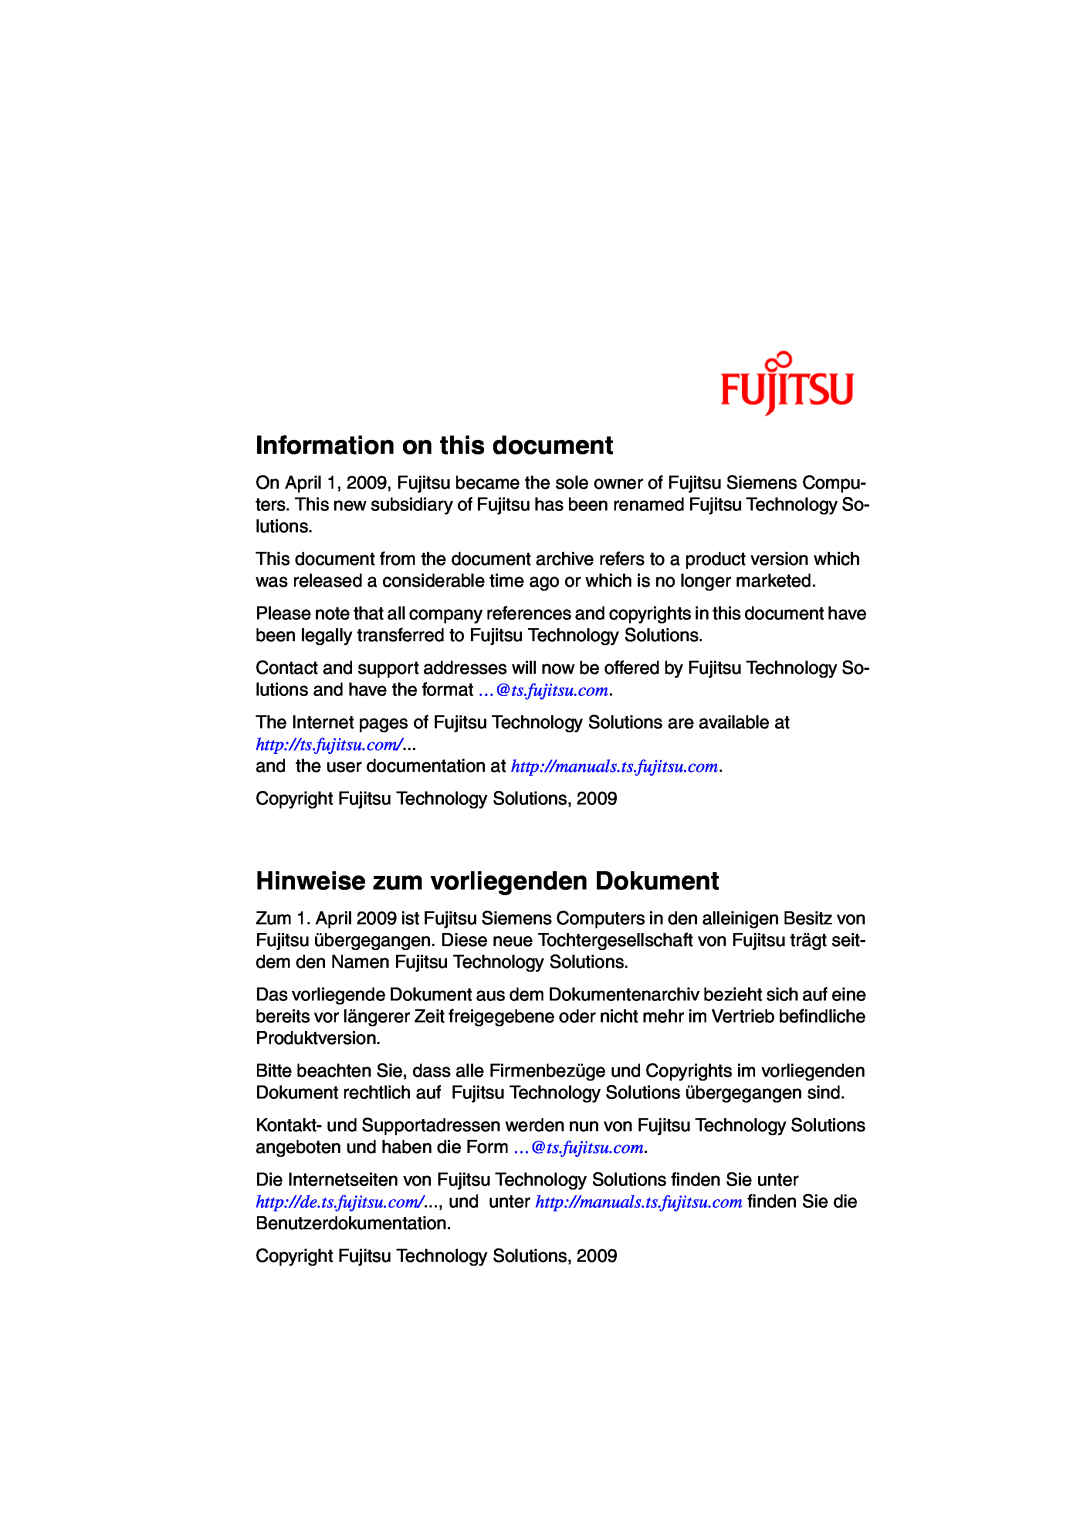 Fujitsu BX600 S2 manual Information on this document, Hinweise zum vorliegenden Dokument, http//ts.fujitsu.com 